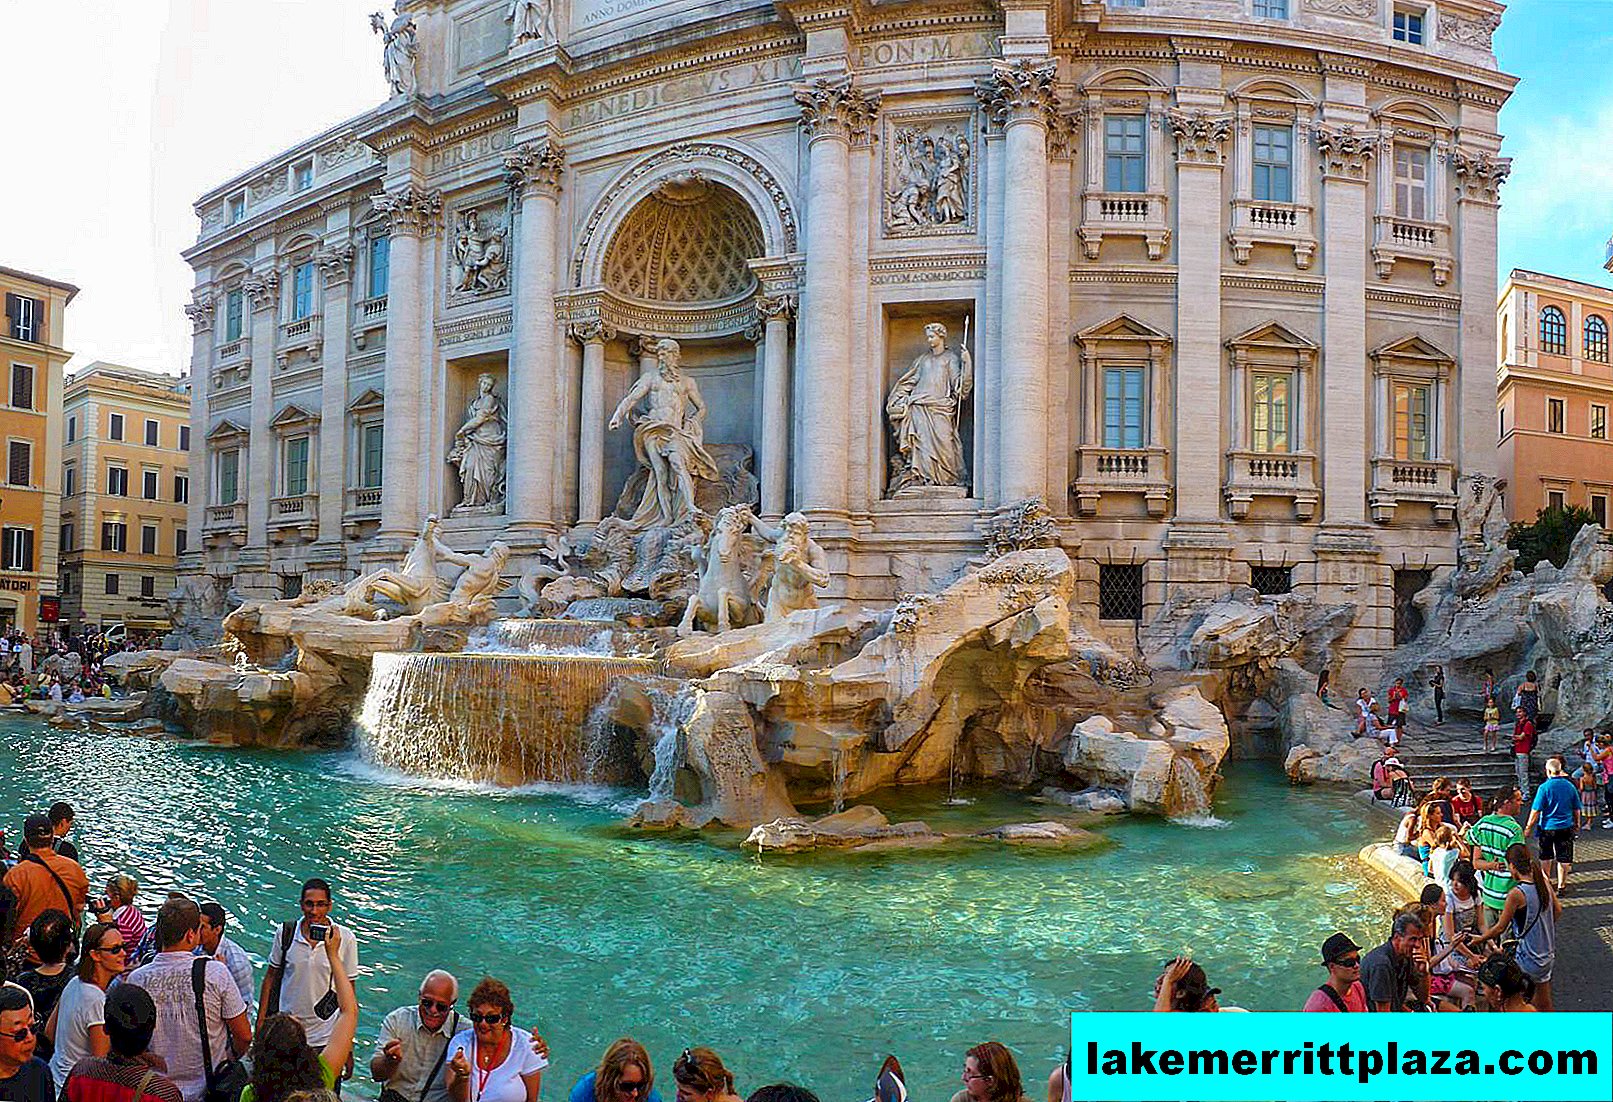 Trevi Fountain - a symbol of Roman Baroque